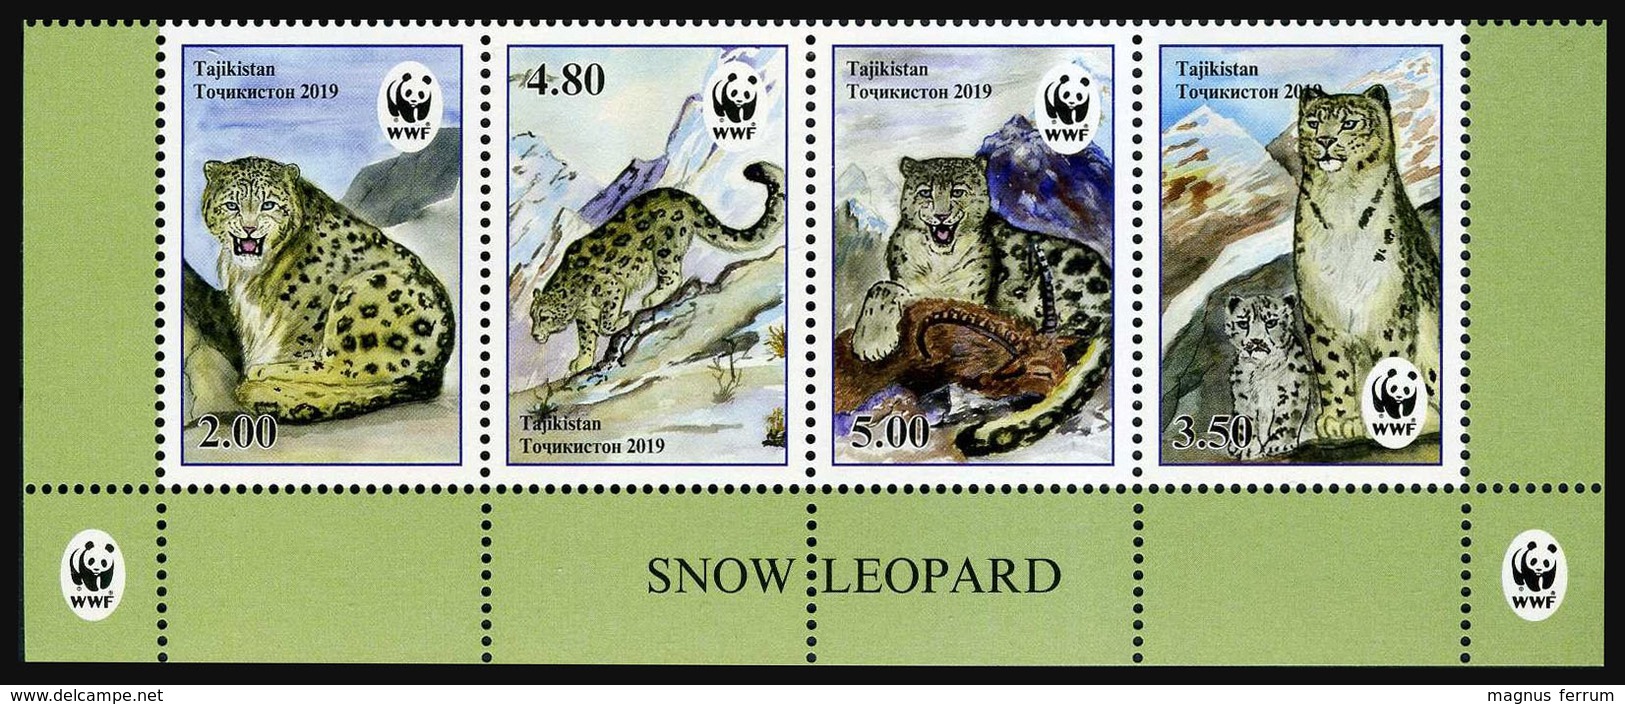 2019 Tajikistan, Fauna, Wild Cats, Snow Leopard, WWF, 4 Stamps, MNH - Unused Stamps